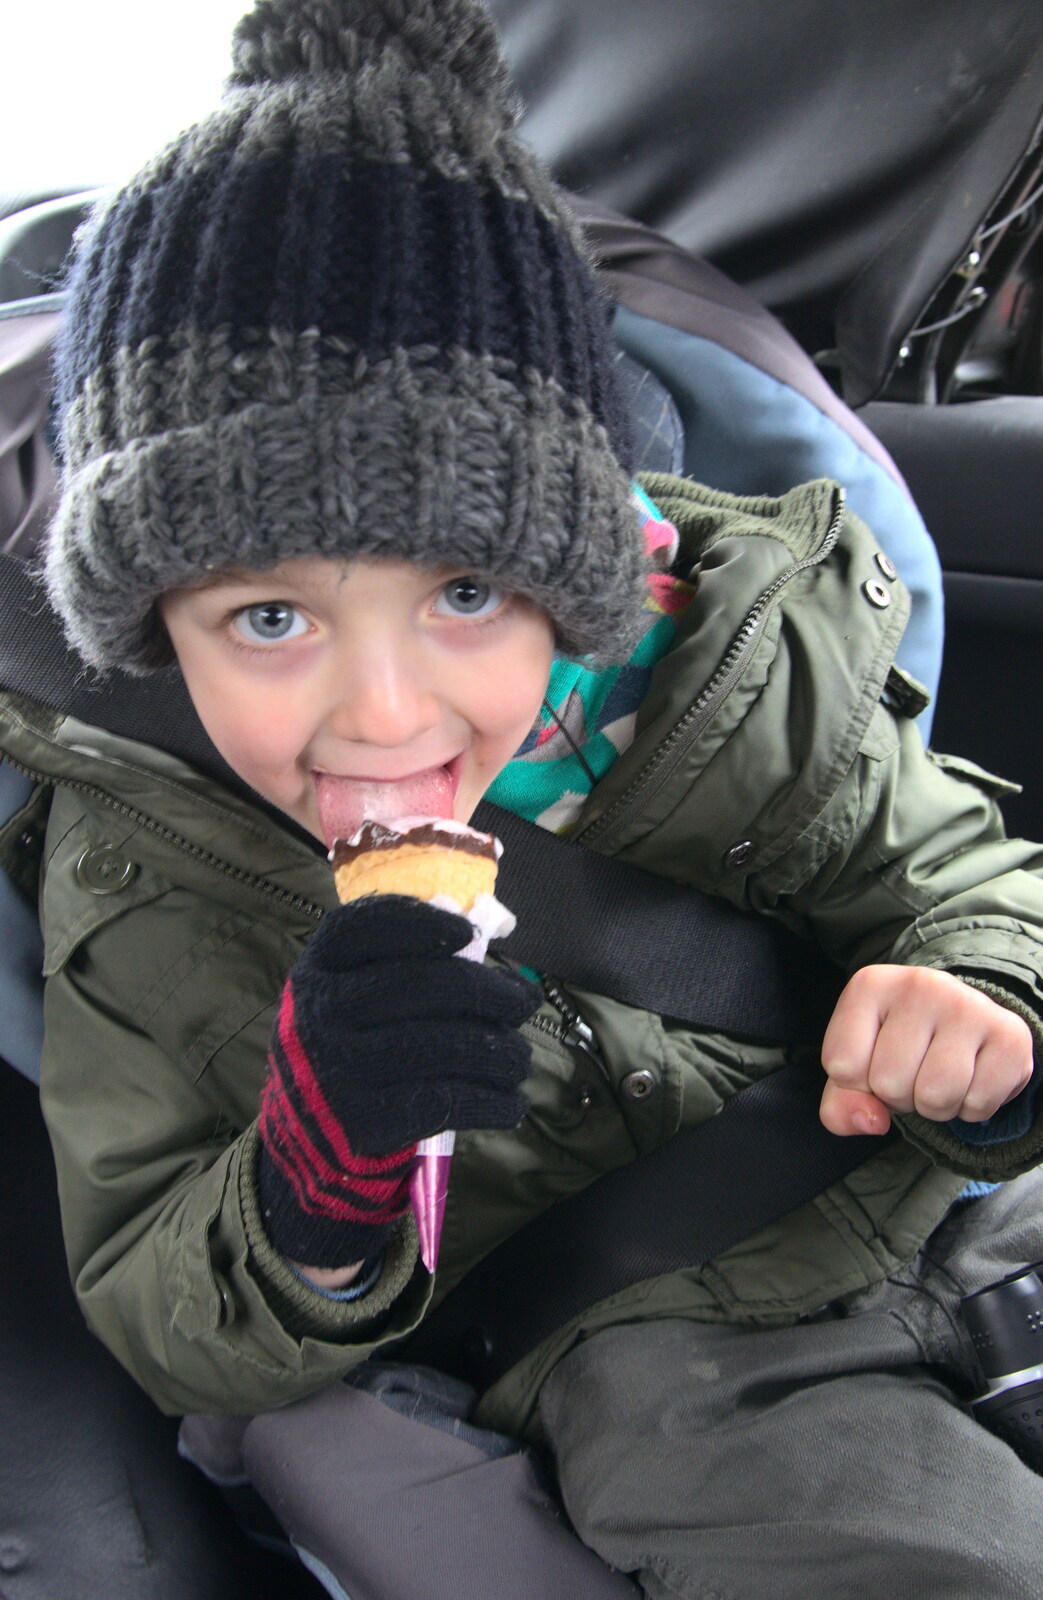 Fred licks his ice cream from A Trip to Grandma J's, Spreyton, Devon - 18th February 2015